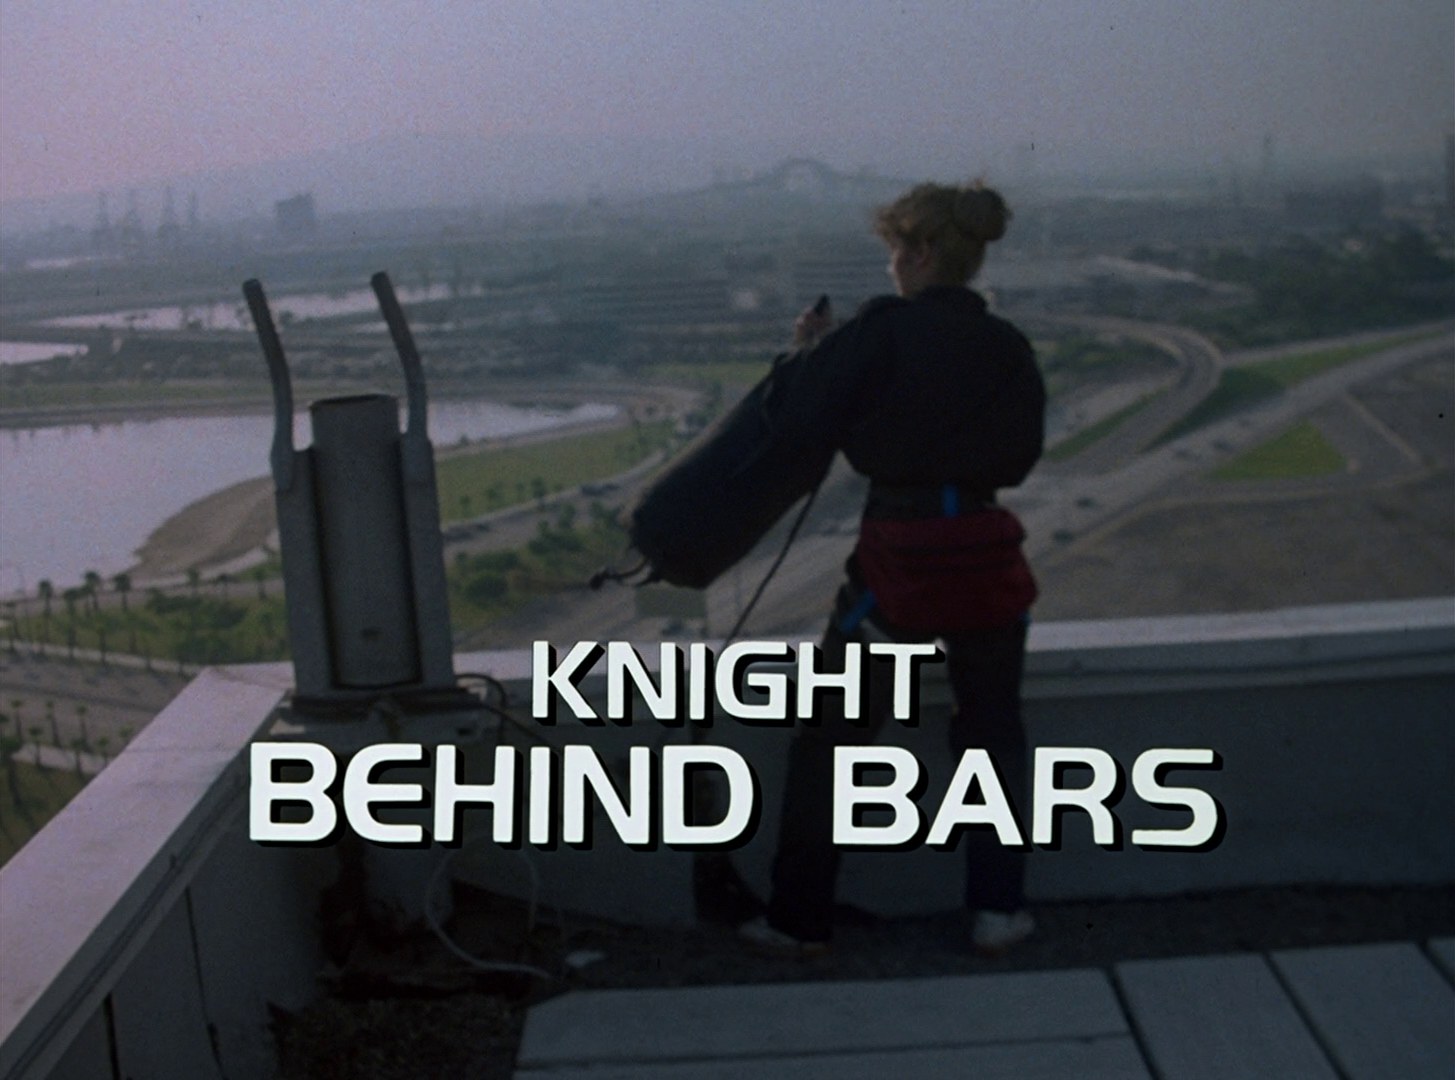 Knight Rider Season 4 - Episode 72 - Knight Behind Bars - Photo 1